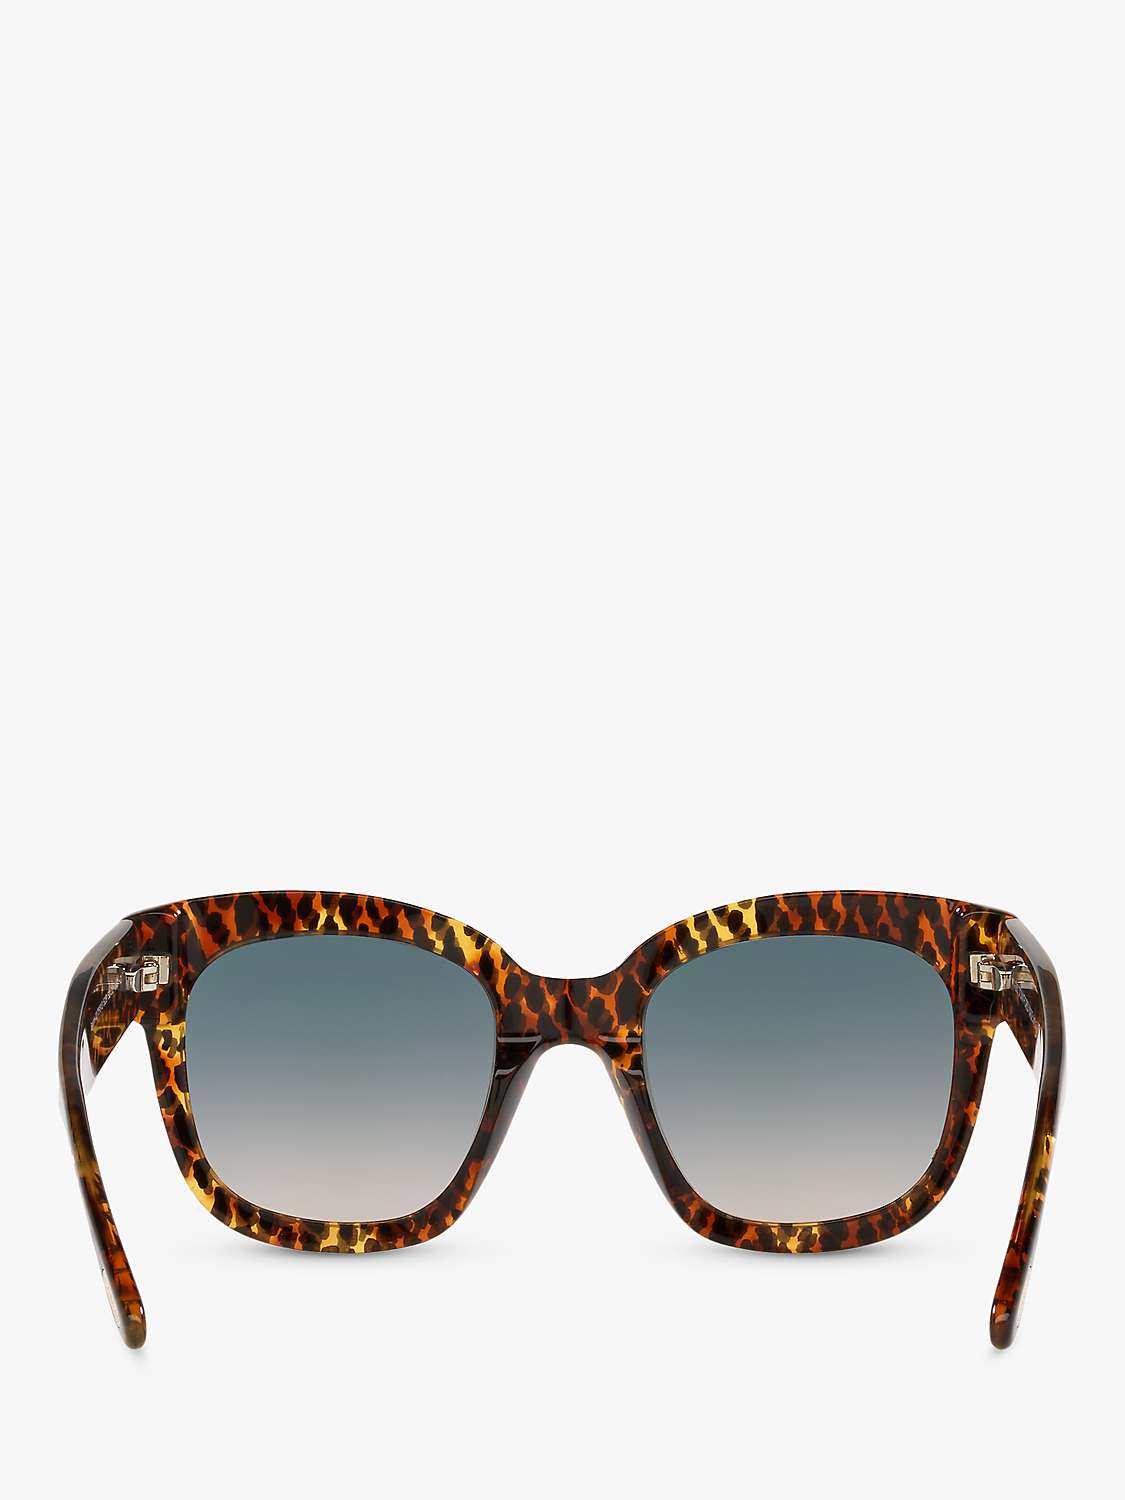 Buy TOM FORD 0TR001298 Women's Square Sunglasses, Tortoise Online at johnlewis.com